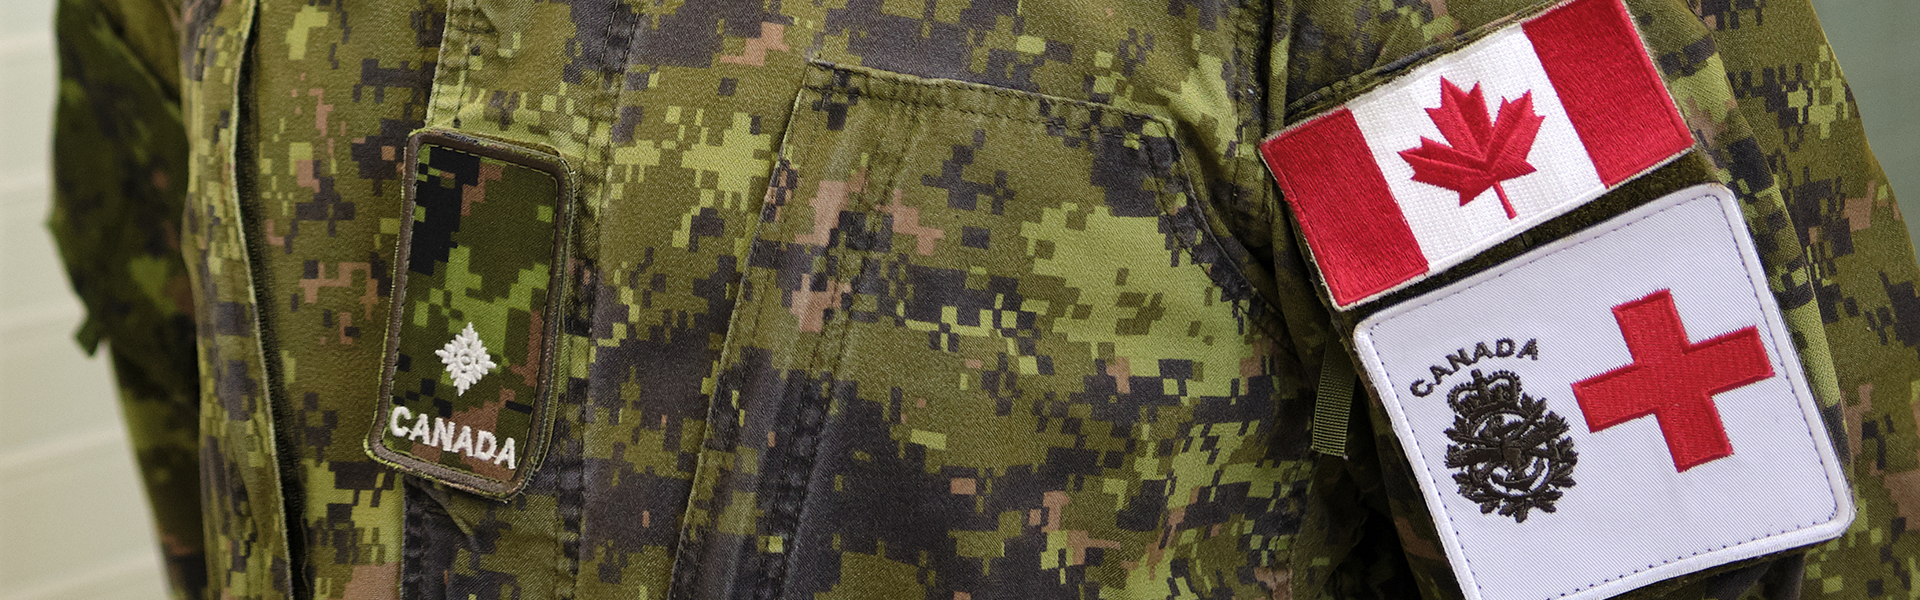 Image of military uniform sleeve